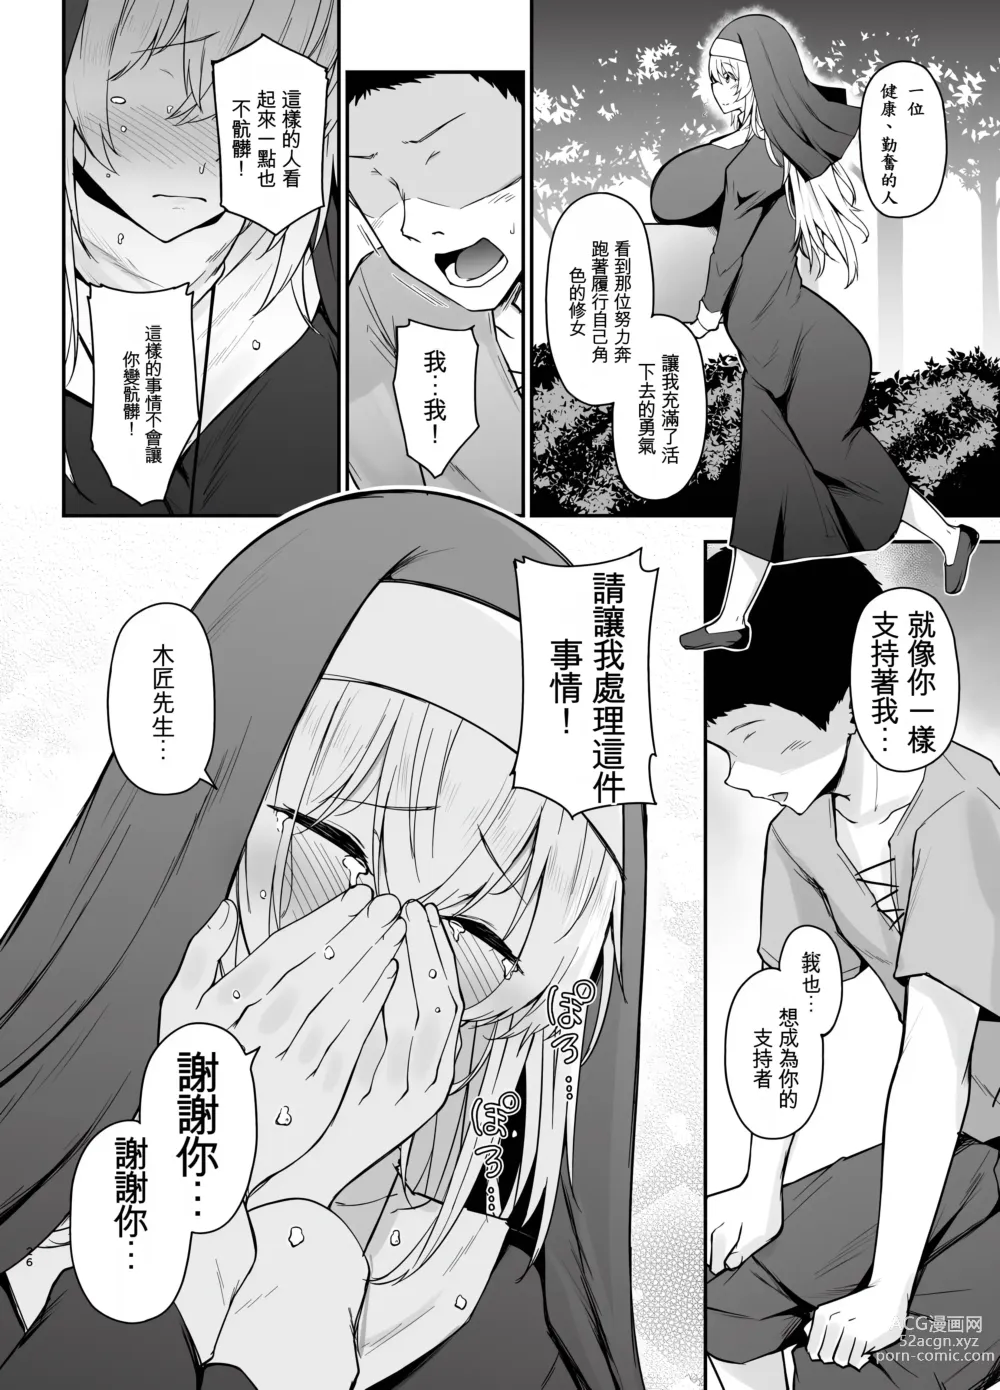 Page 25 of doujinshi 你討厭沒有品味的女人嗎?